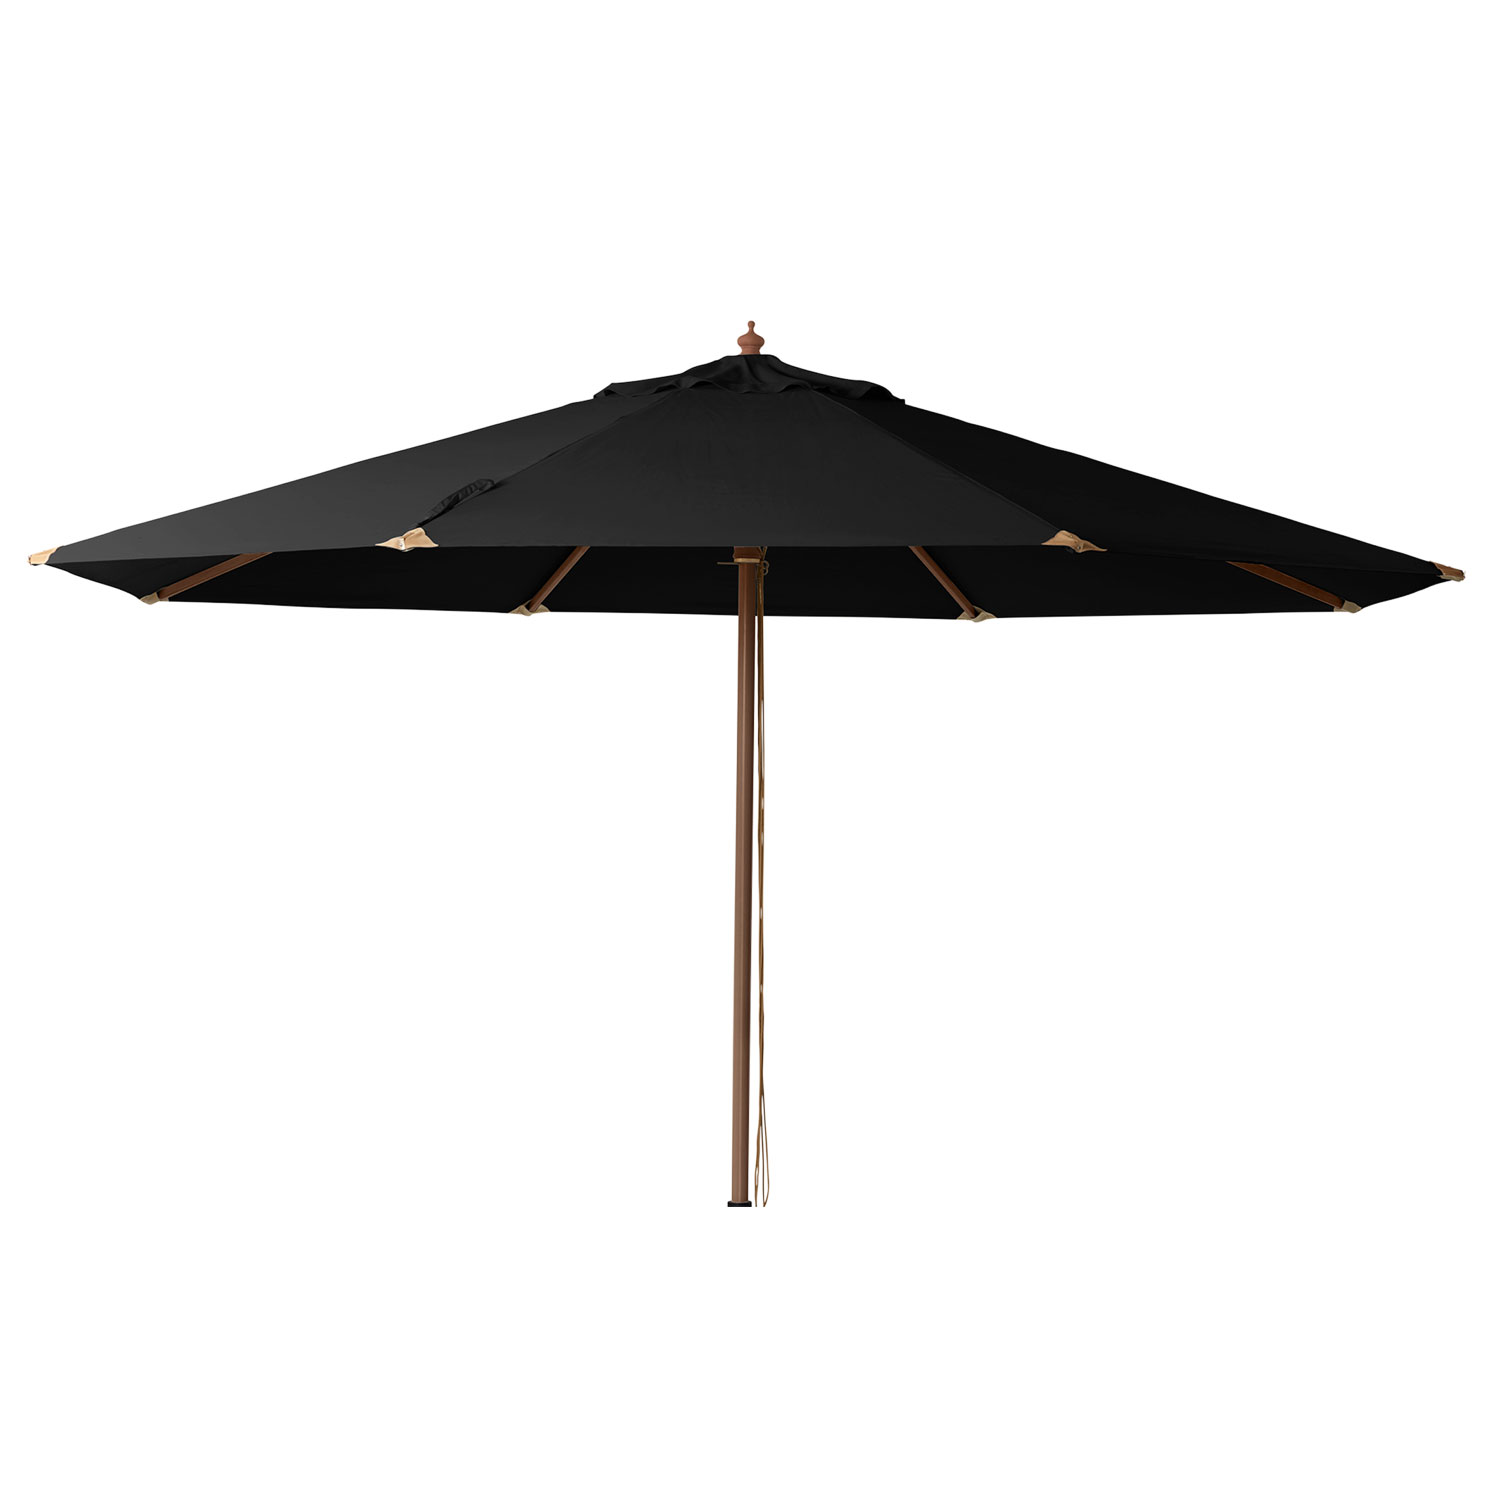 Cinas Lizzano 400 cm Aurinkovarjo Puinen kehys musta